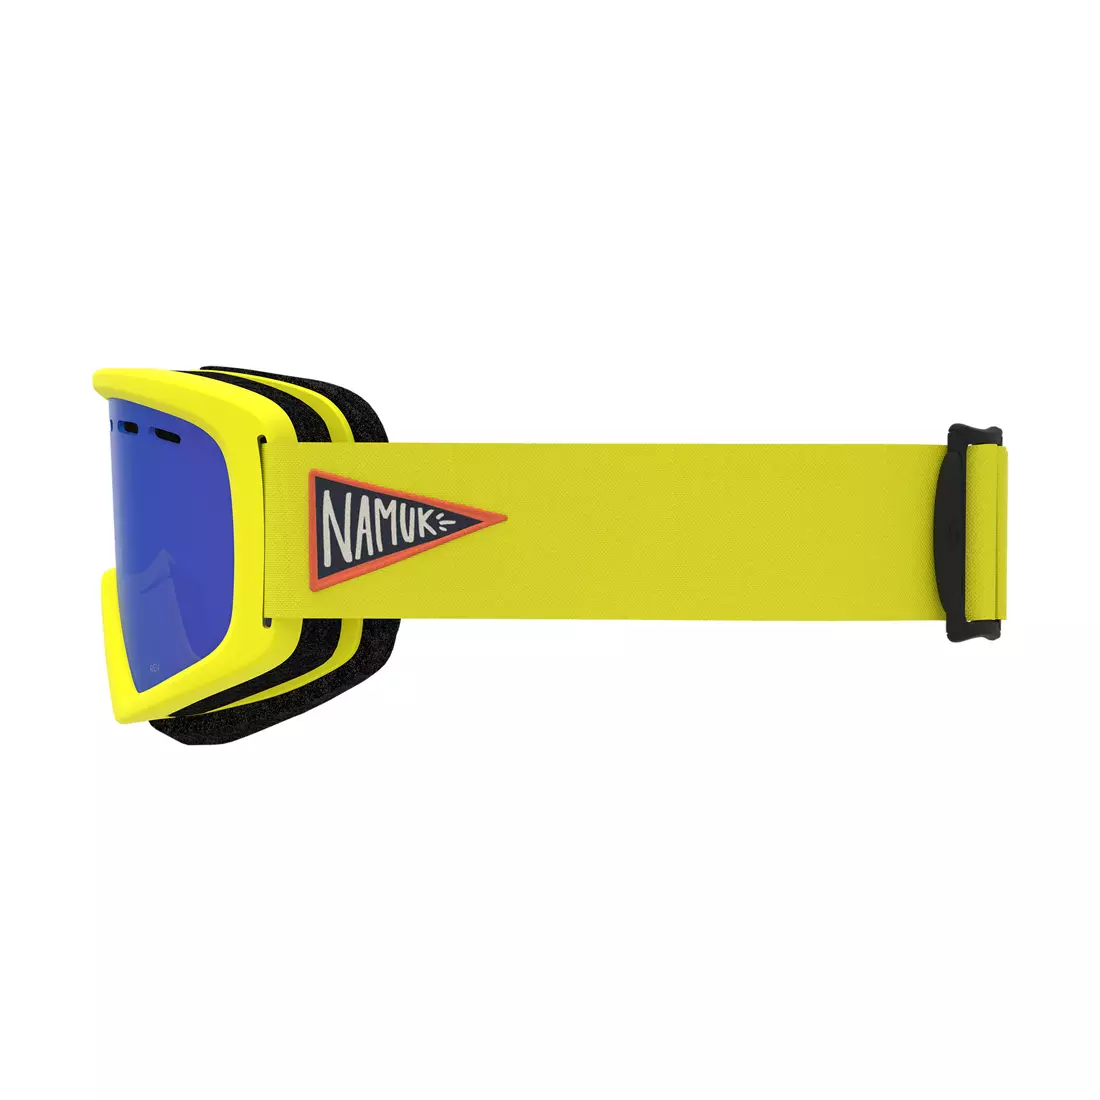 Junior Ski-/Snowboardbrille REV NAMUK YELLOW GR-7105433